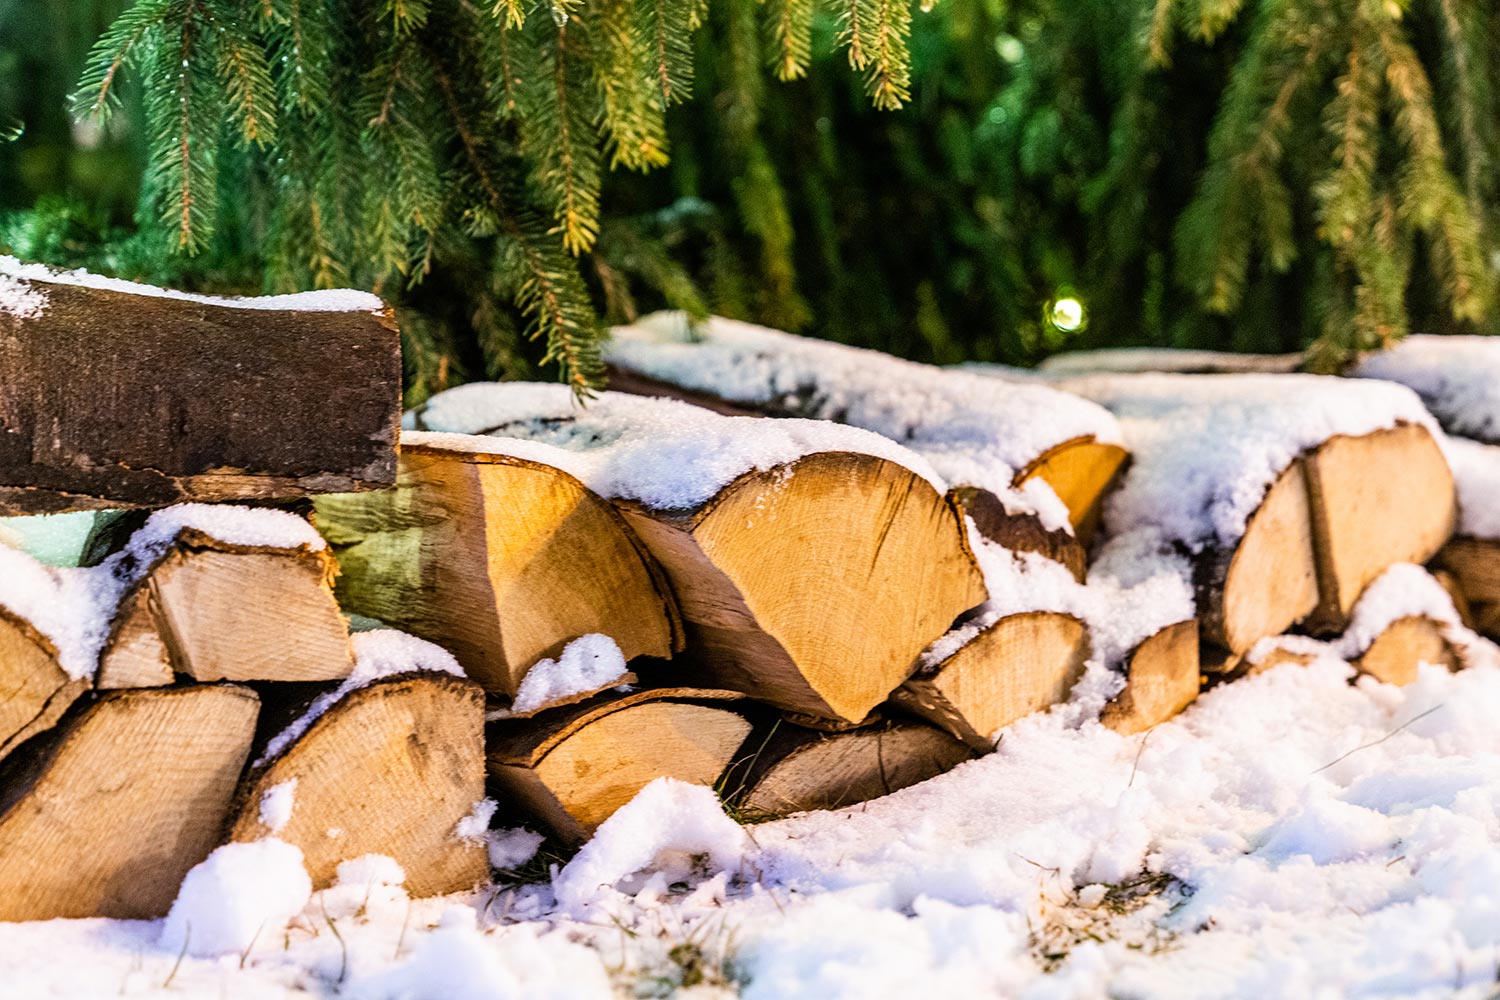 Firewood in snow under a pine